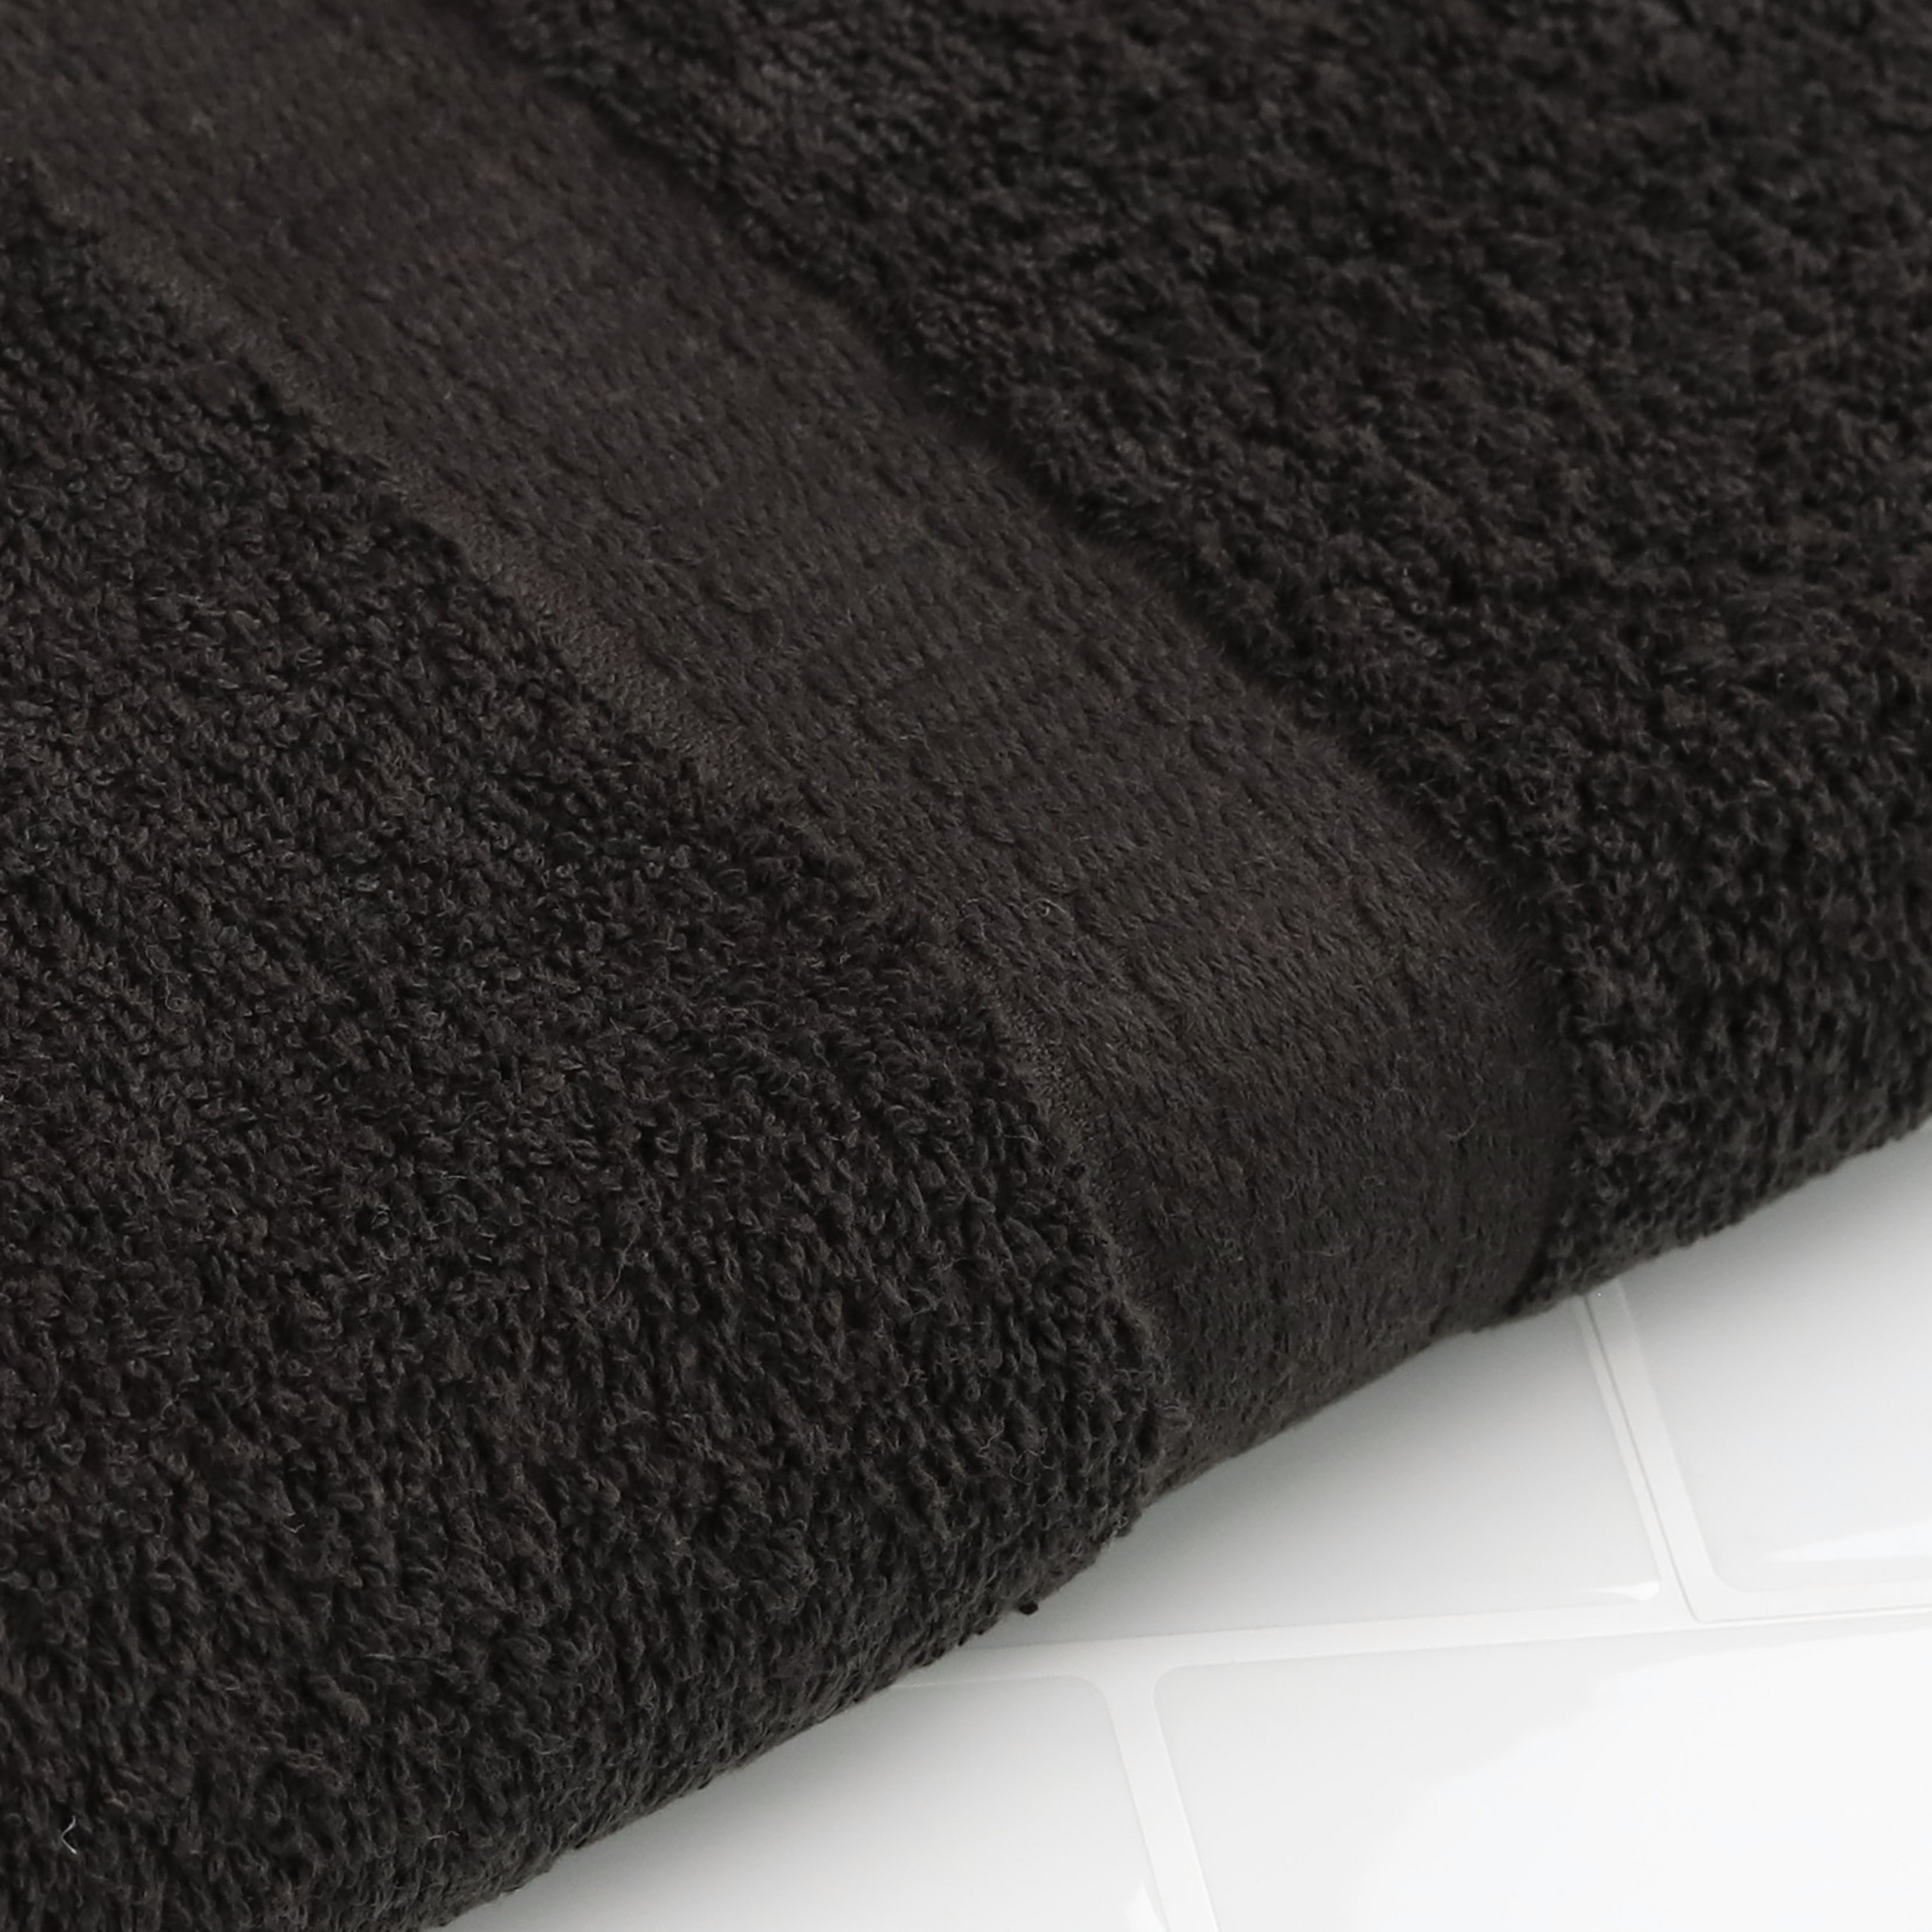 Mainstays Solid Bath Towel, Rich Black - image 3 of 9